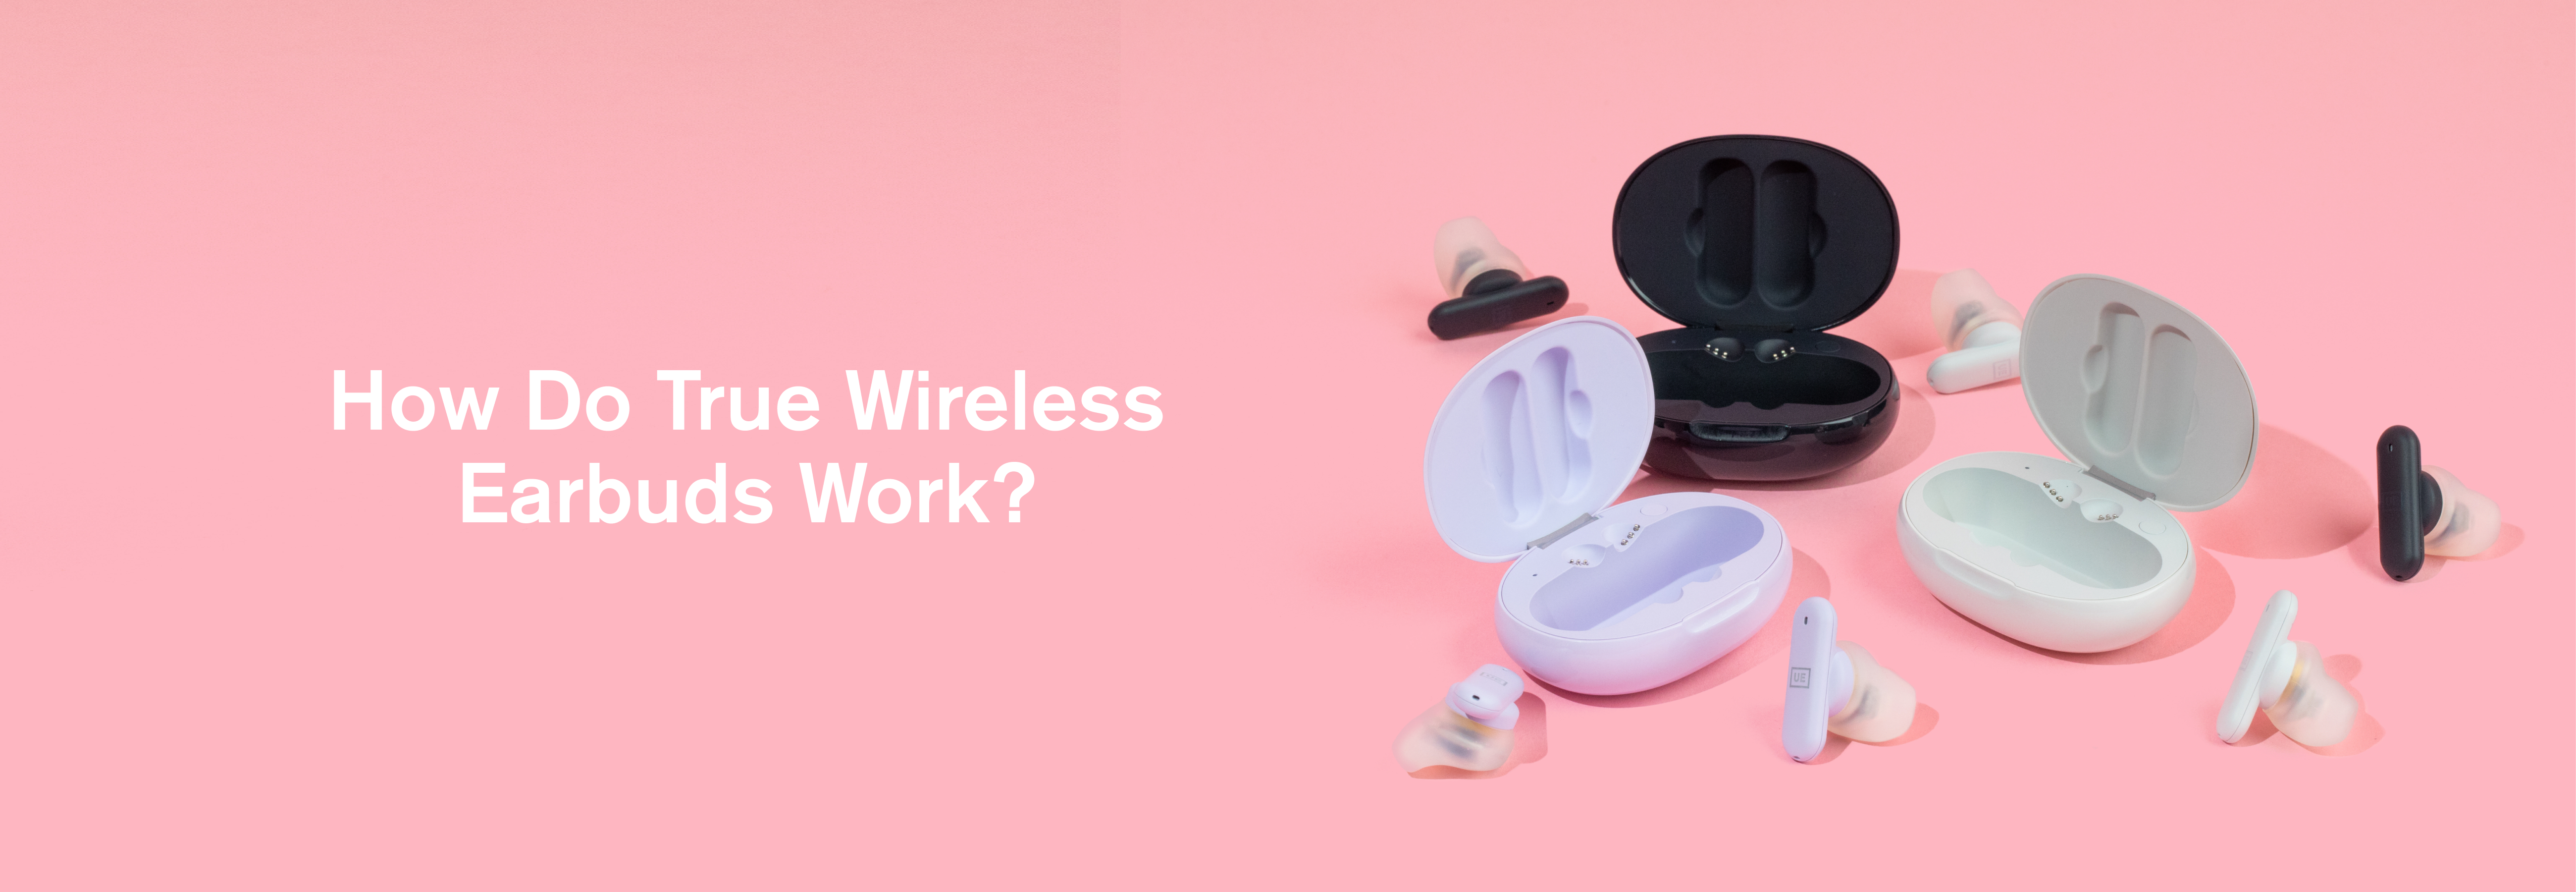 How Do True Wireless Earbuds Work?